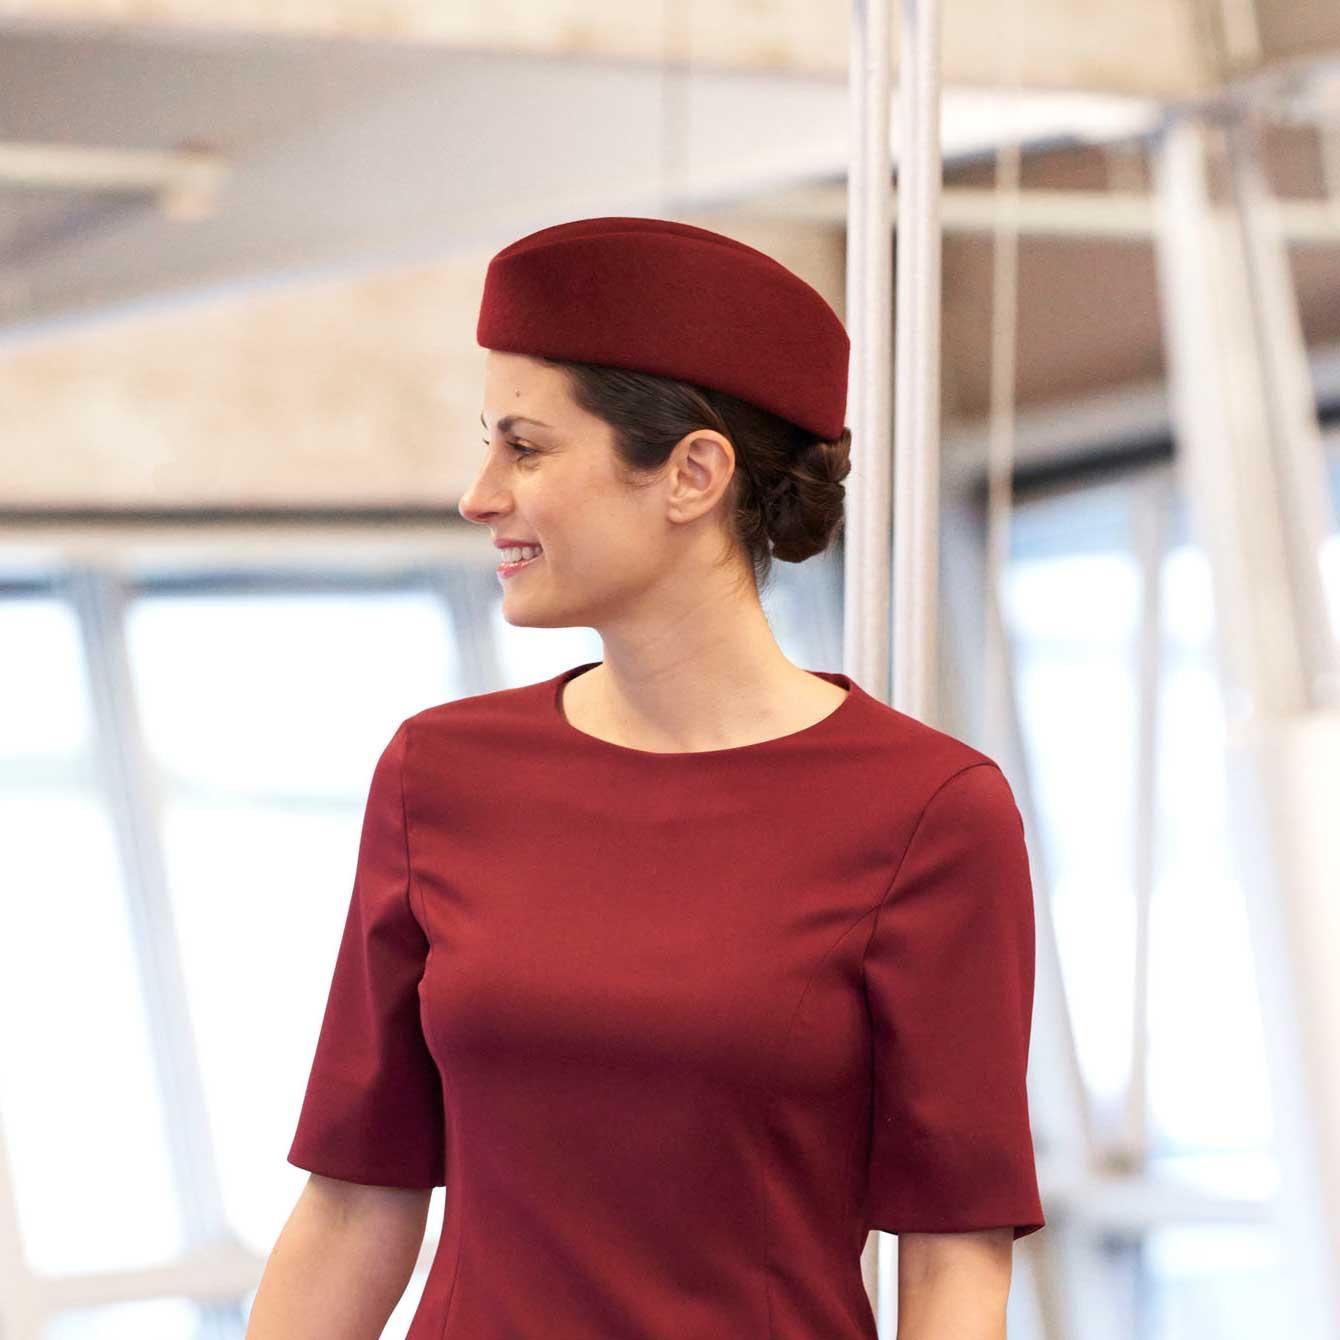 Burgundy airline hat on female cabin crew